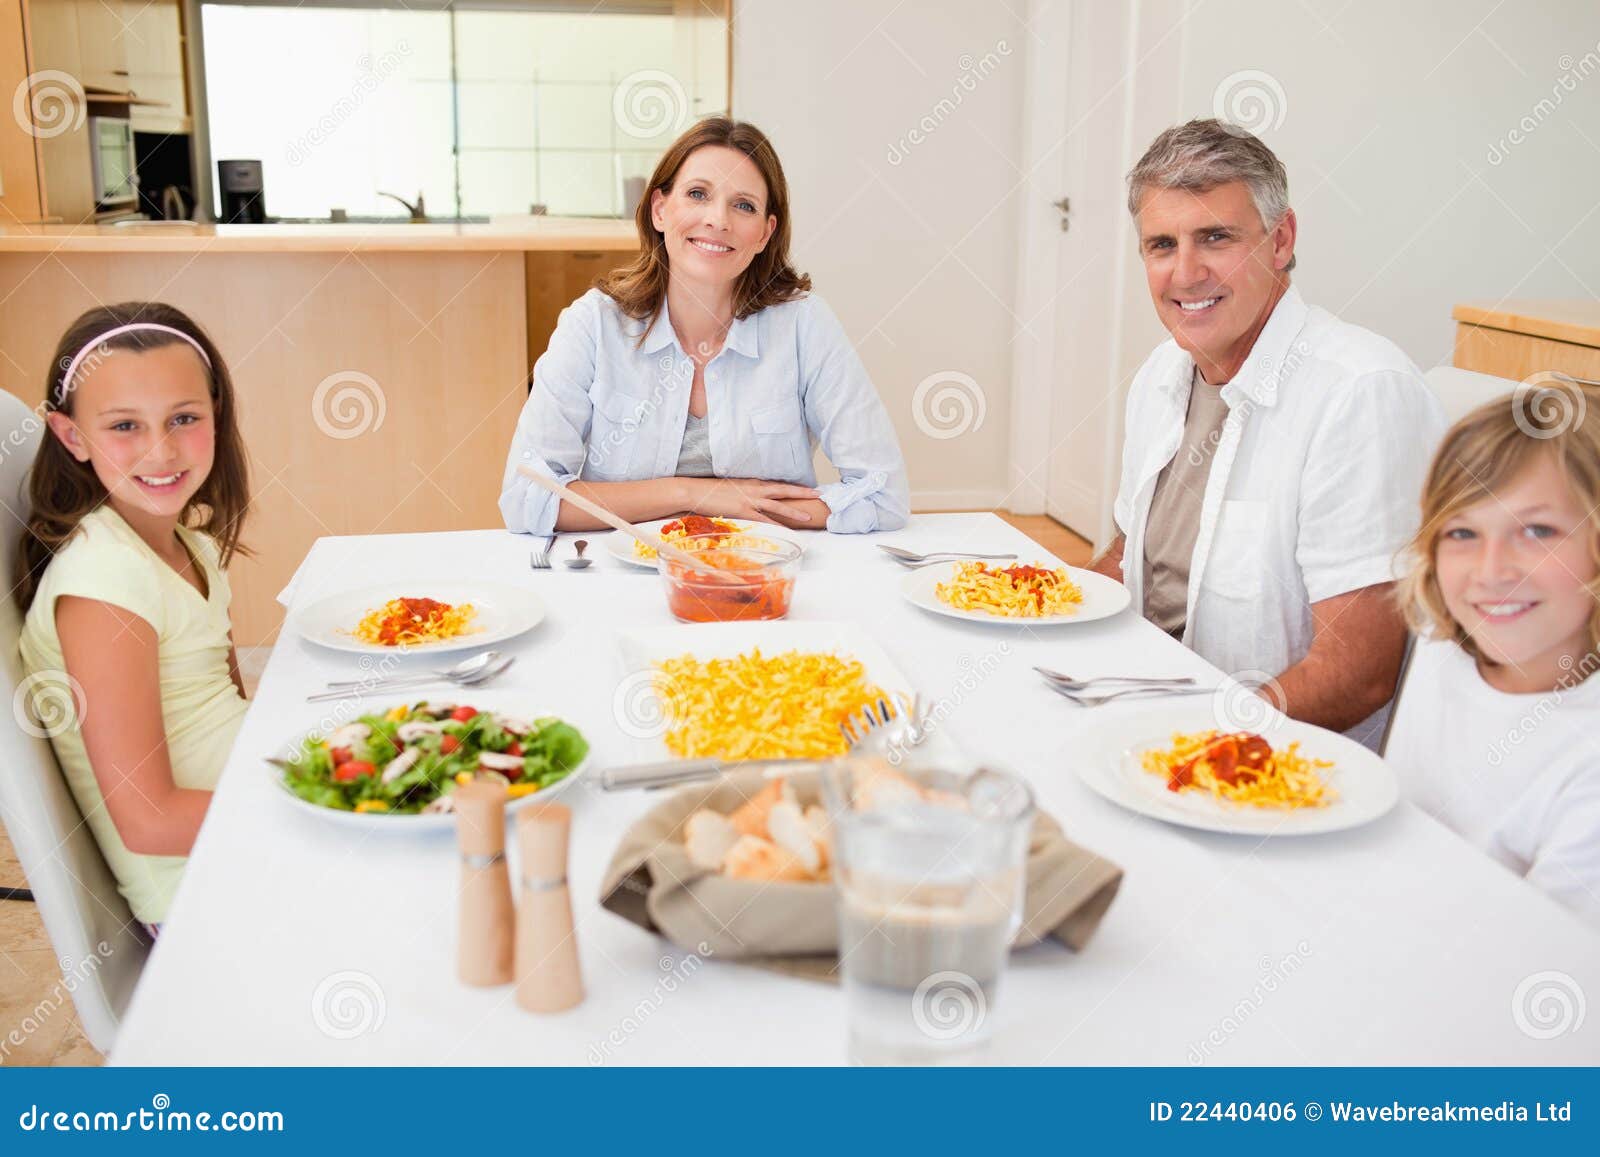 Family Having Dinner Royalty Free Stock Image - Image: 22440406